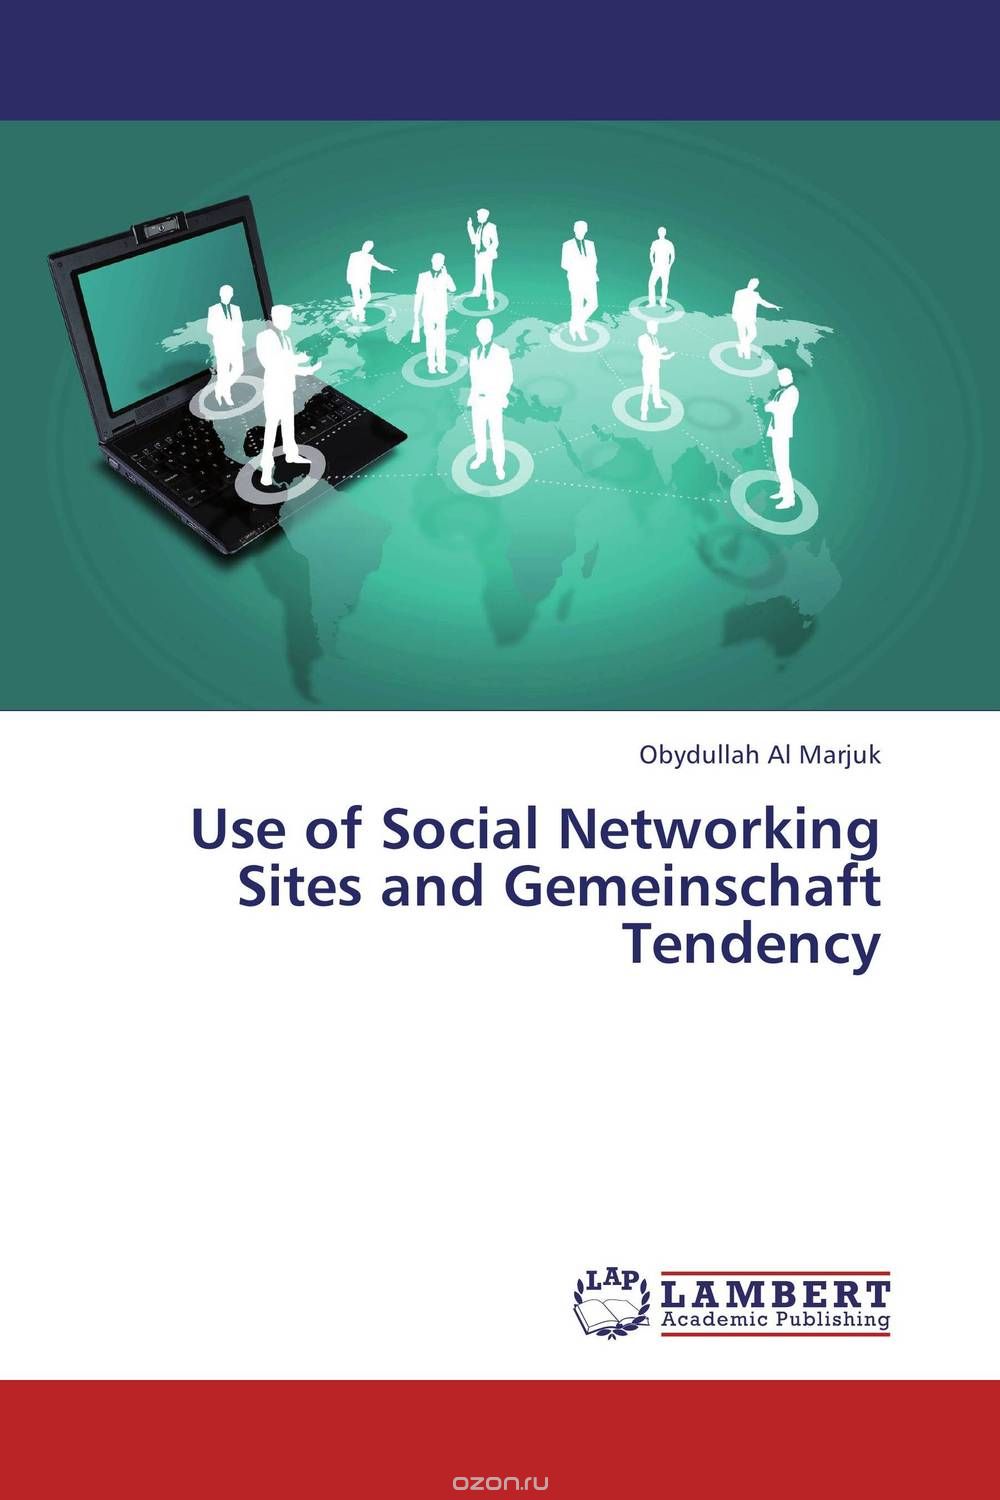 Скачать книгу "Use of Social Networking Sites and Gemeinschaft Tendency"